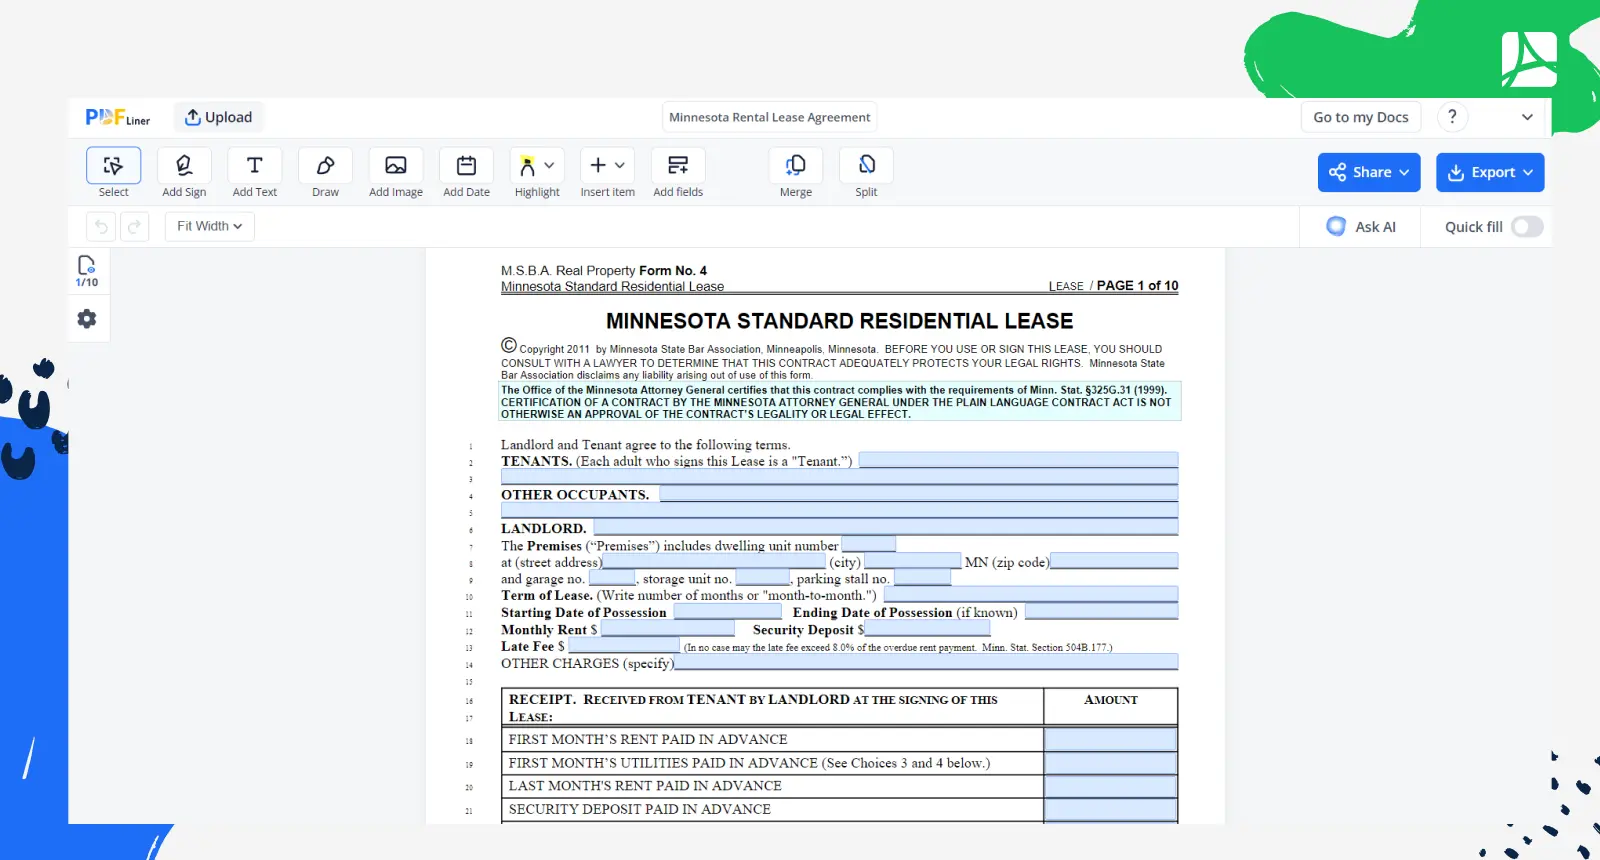 Minnesota Rental Lease Agreement Screenshot